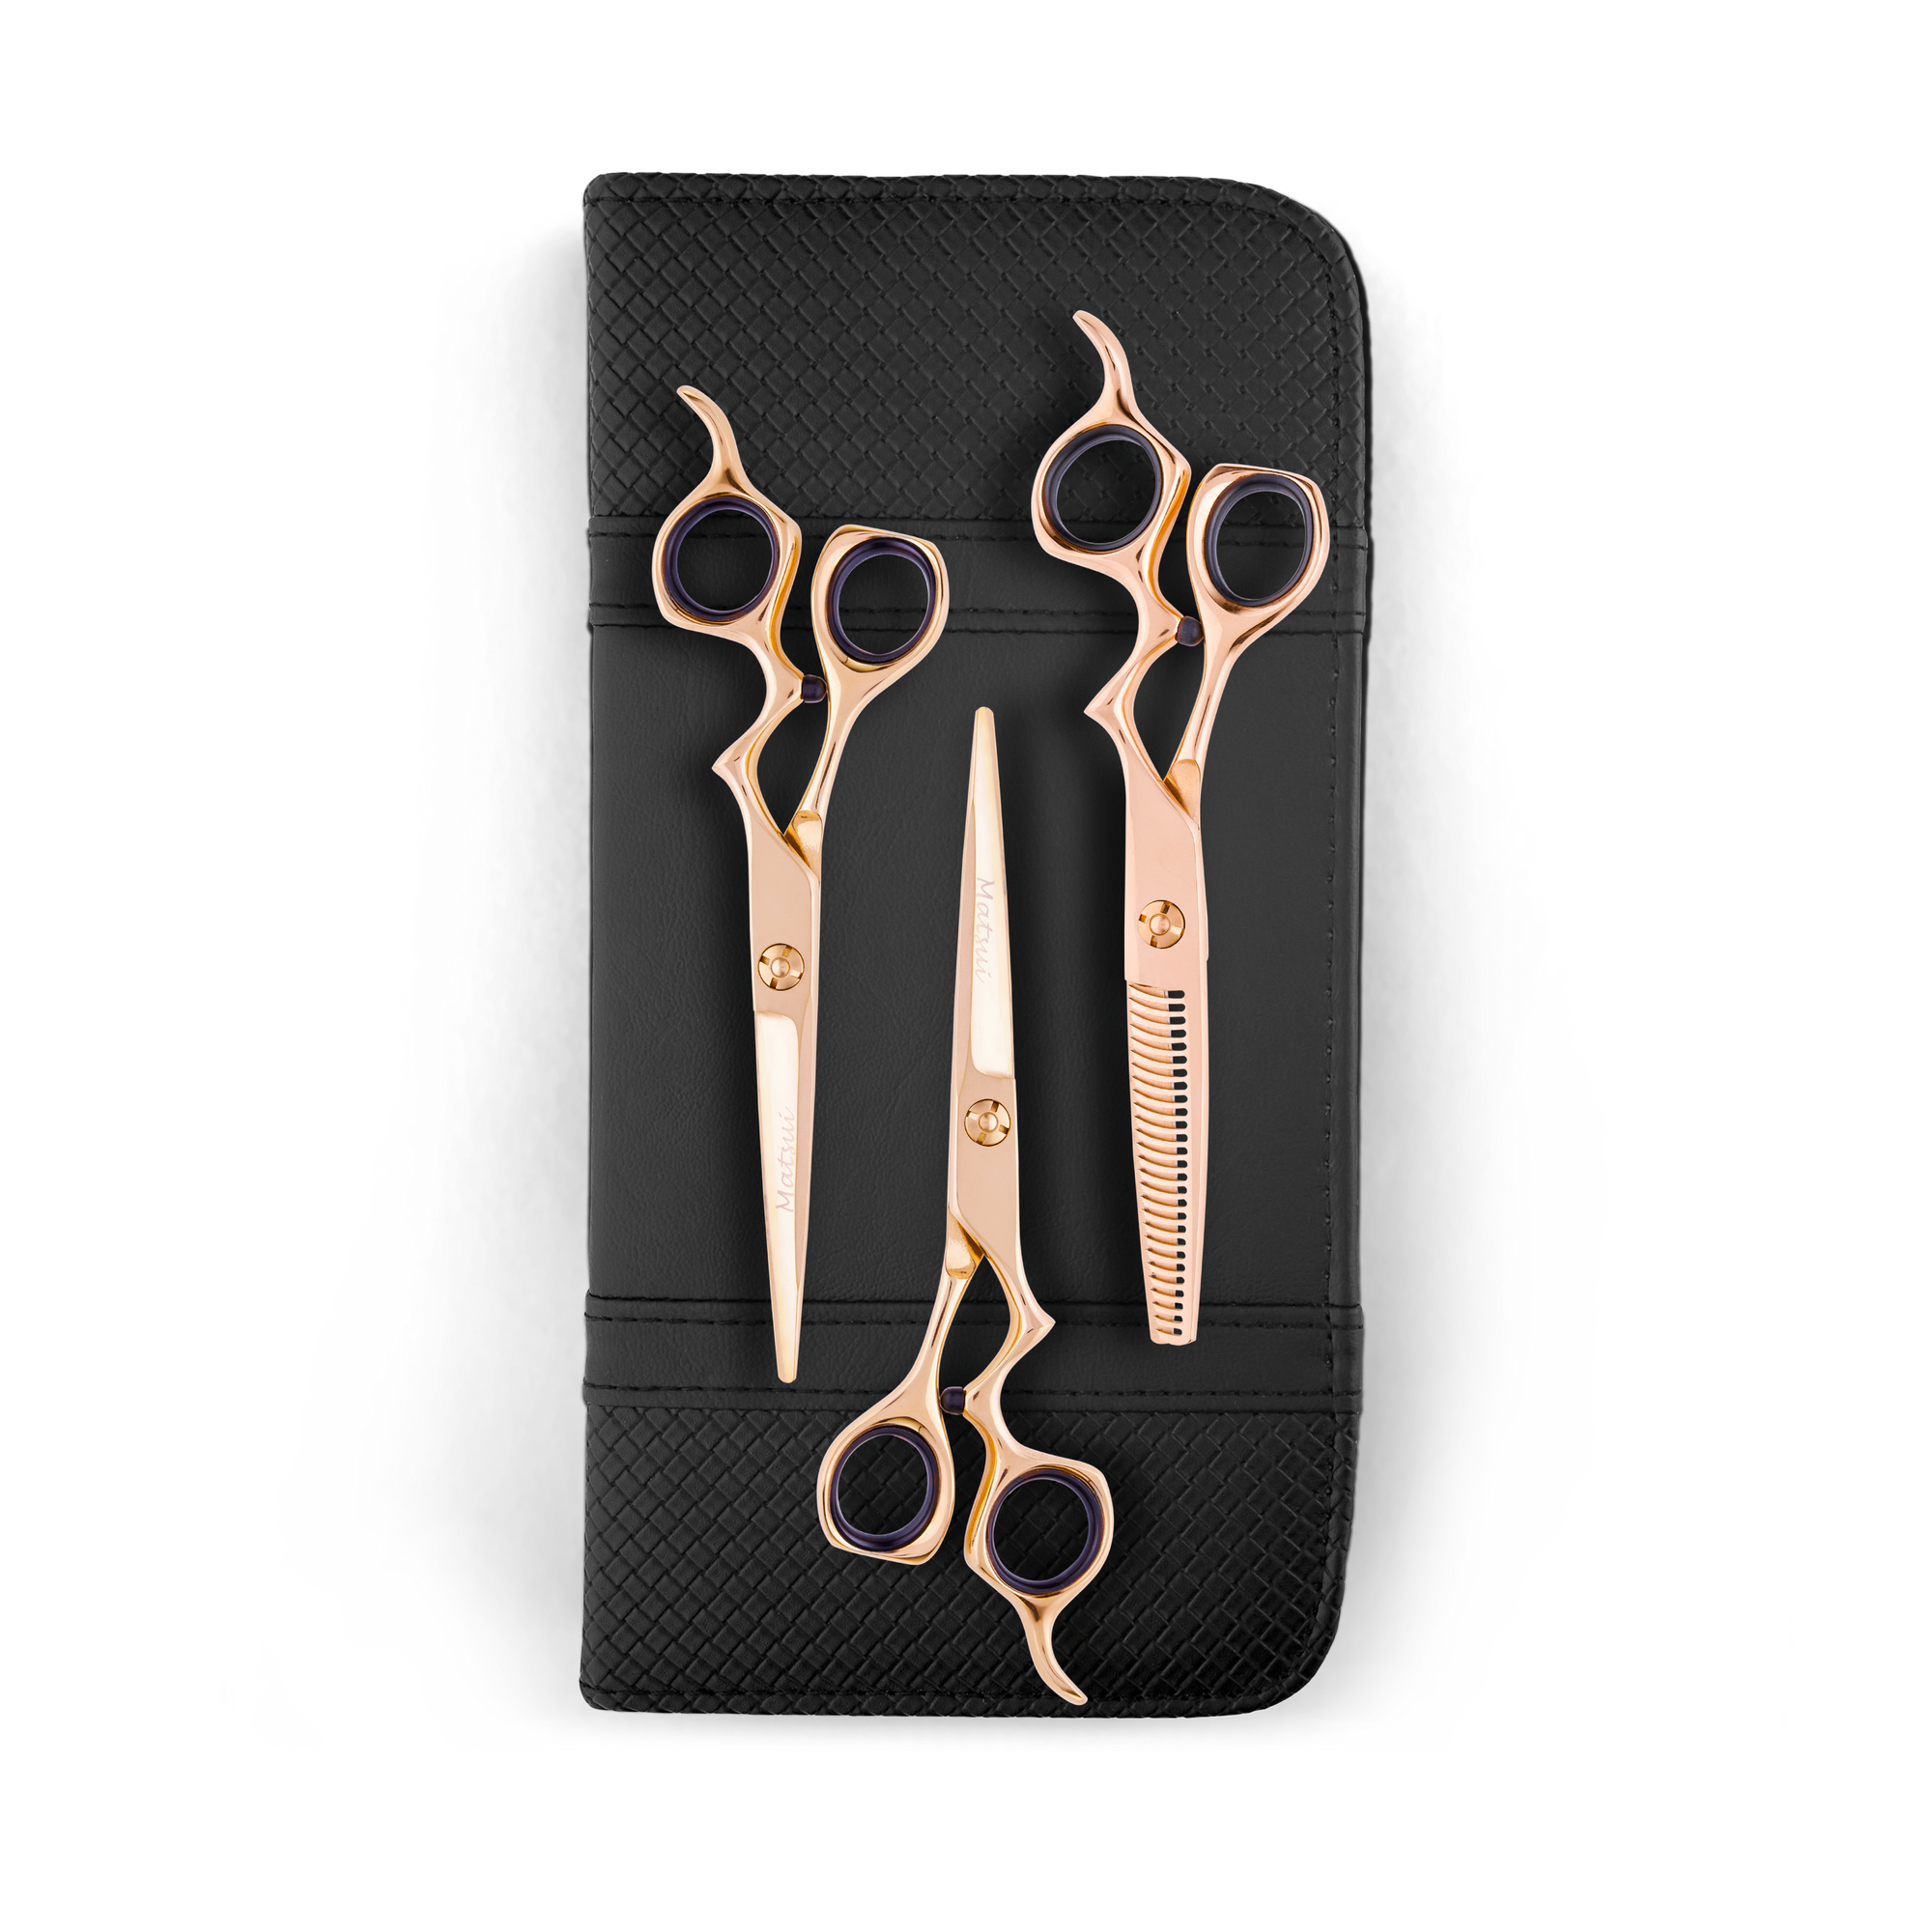  Matsui Classic Ergo Support Rose Gold Shear Thinner Triple Set - Scissor Tech Canada (6676265730102)